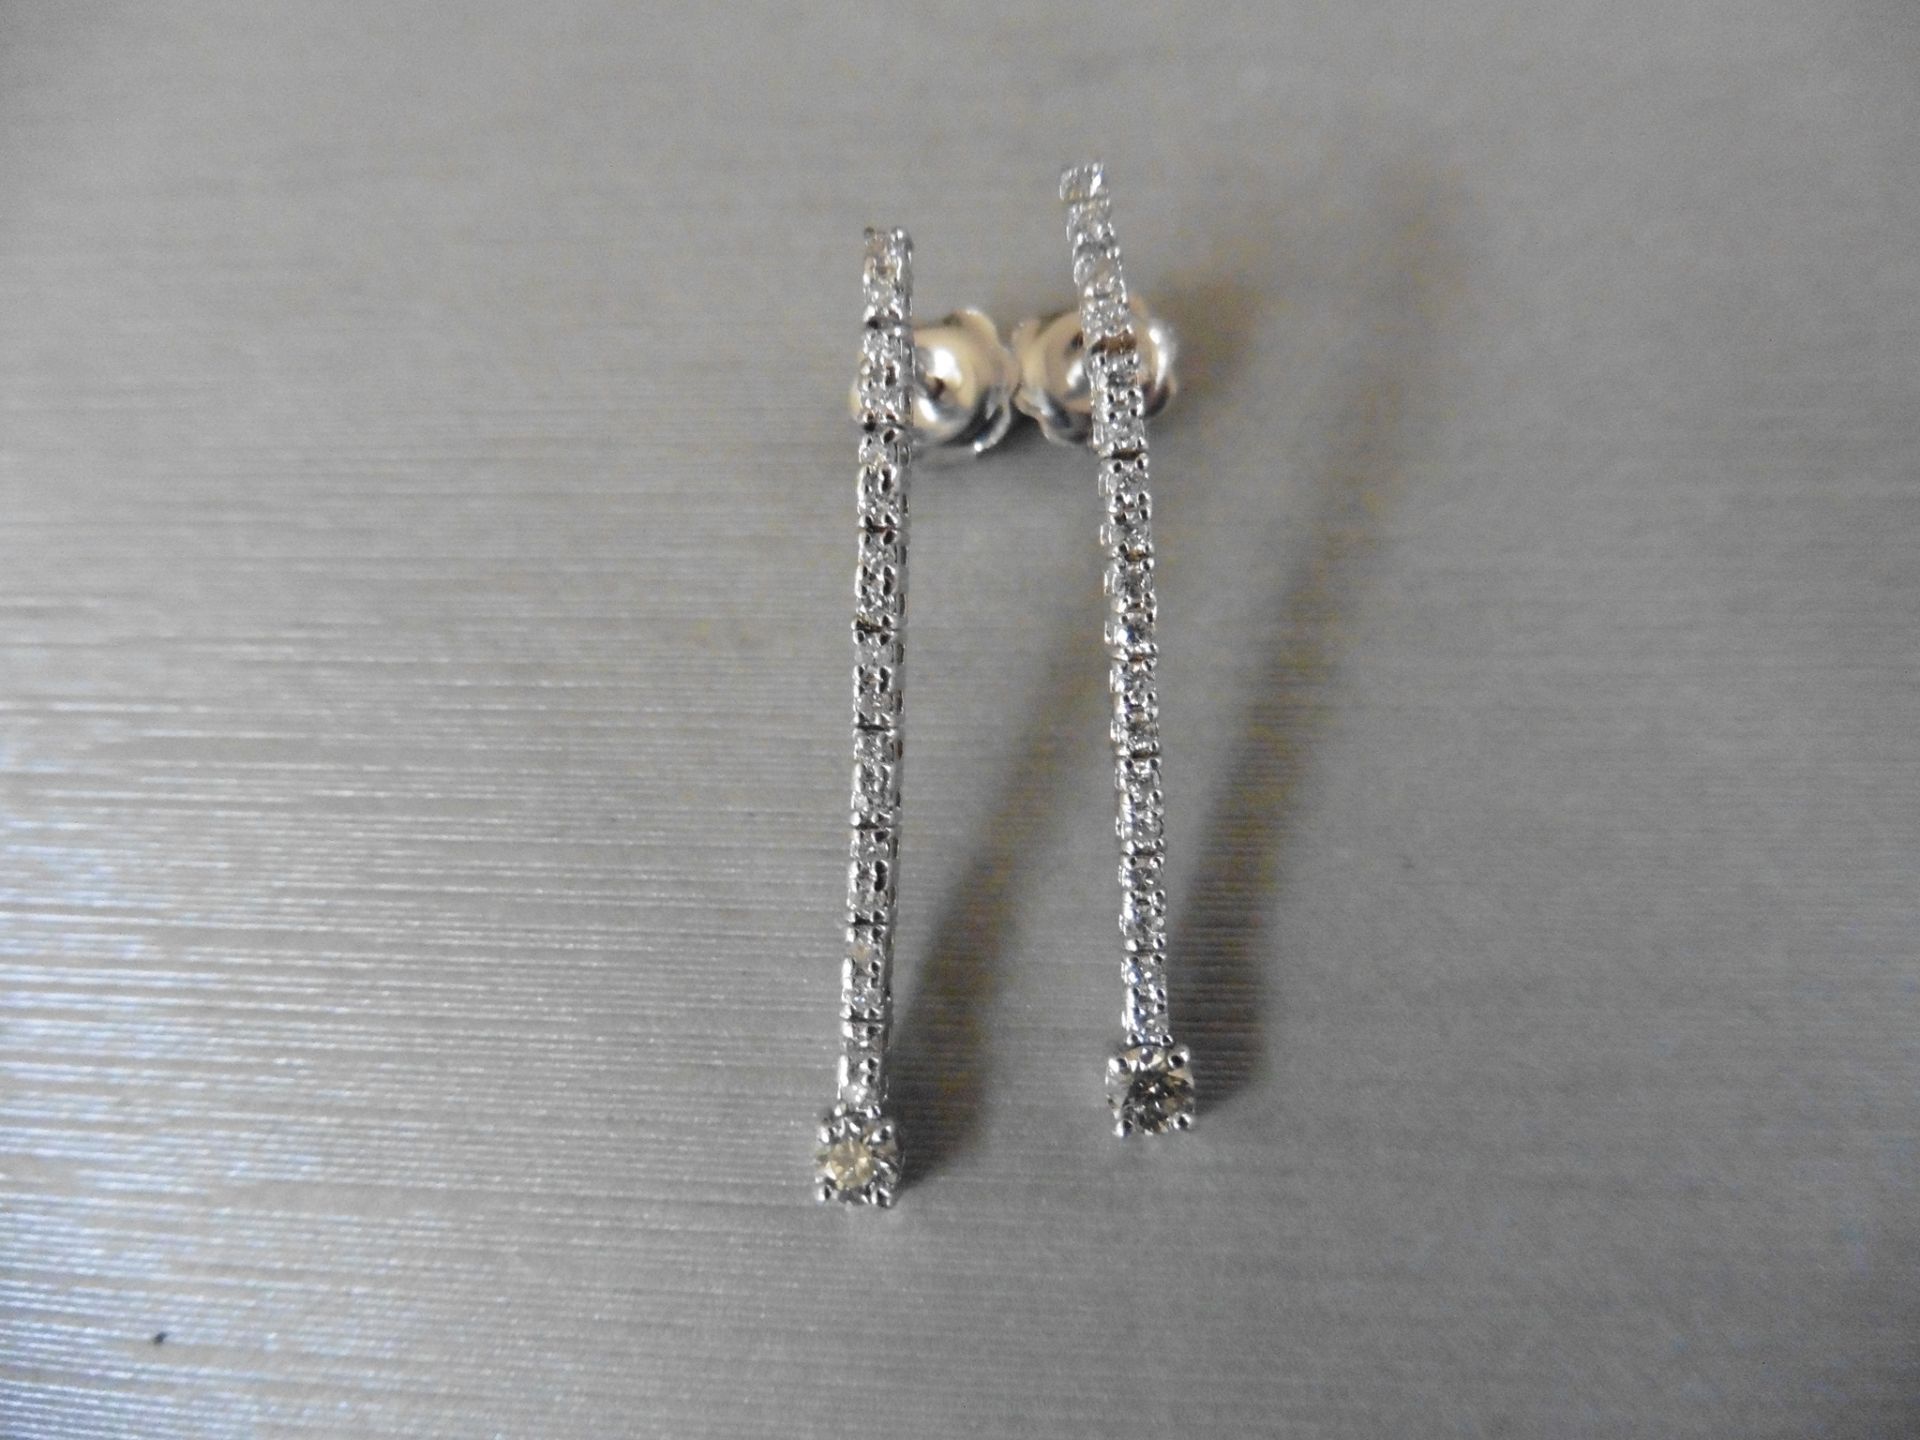 18ct white gold diamond drop earrings set with brilliant cut diamonds. I colour, si2 clarity.